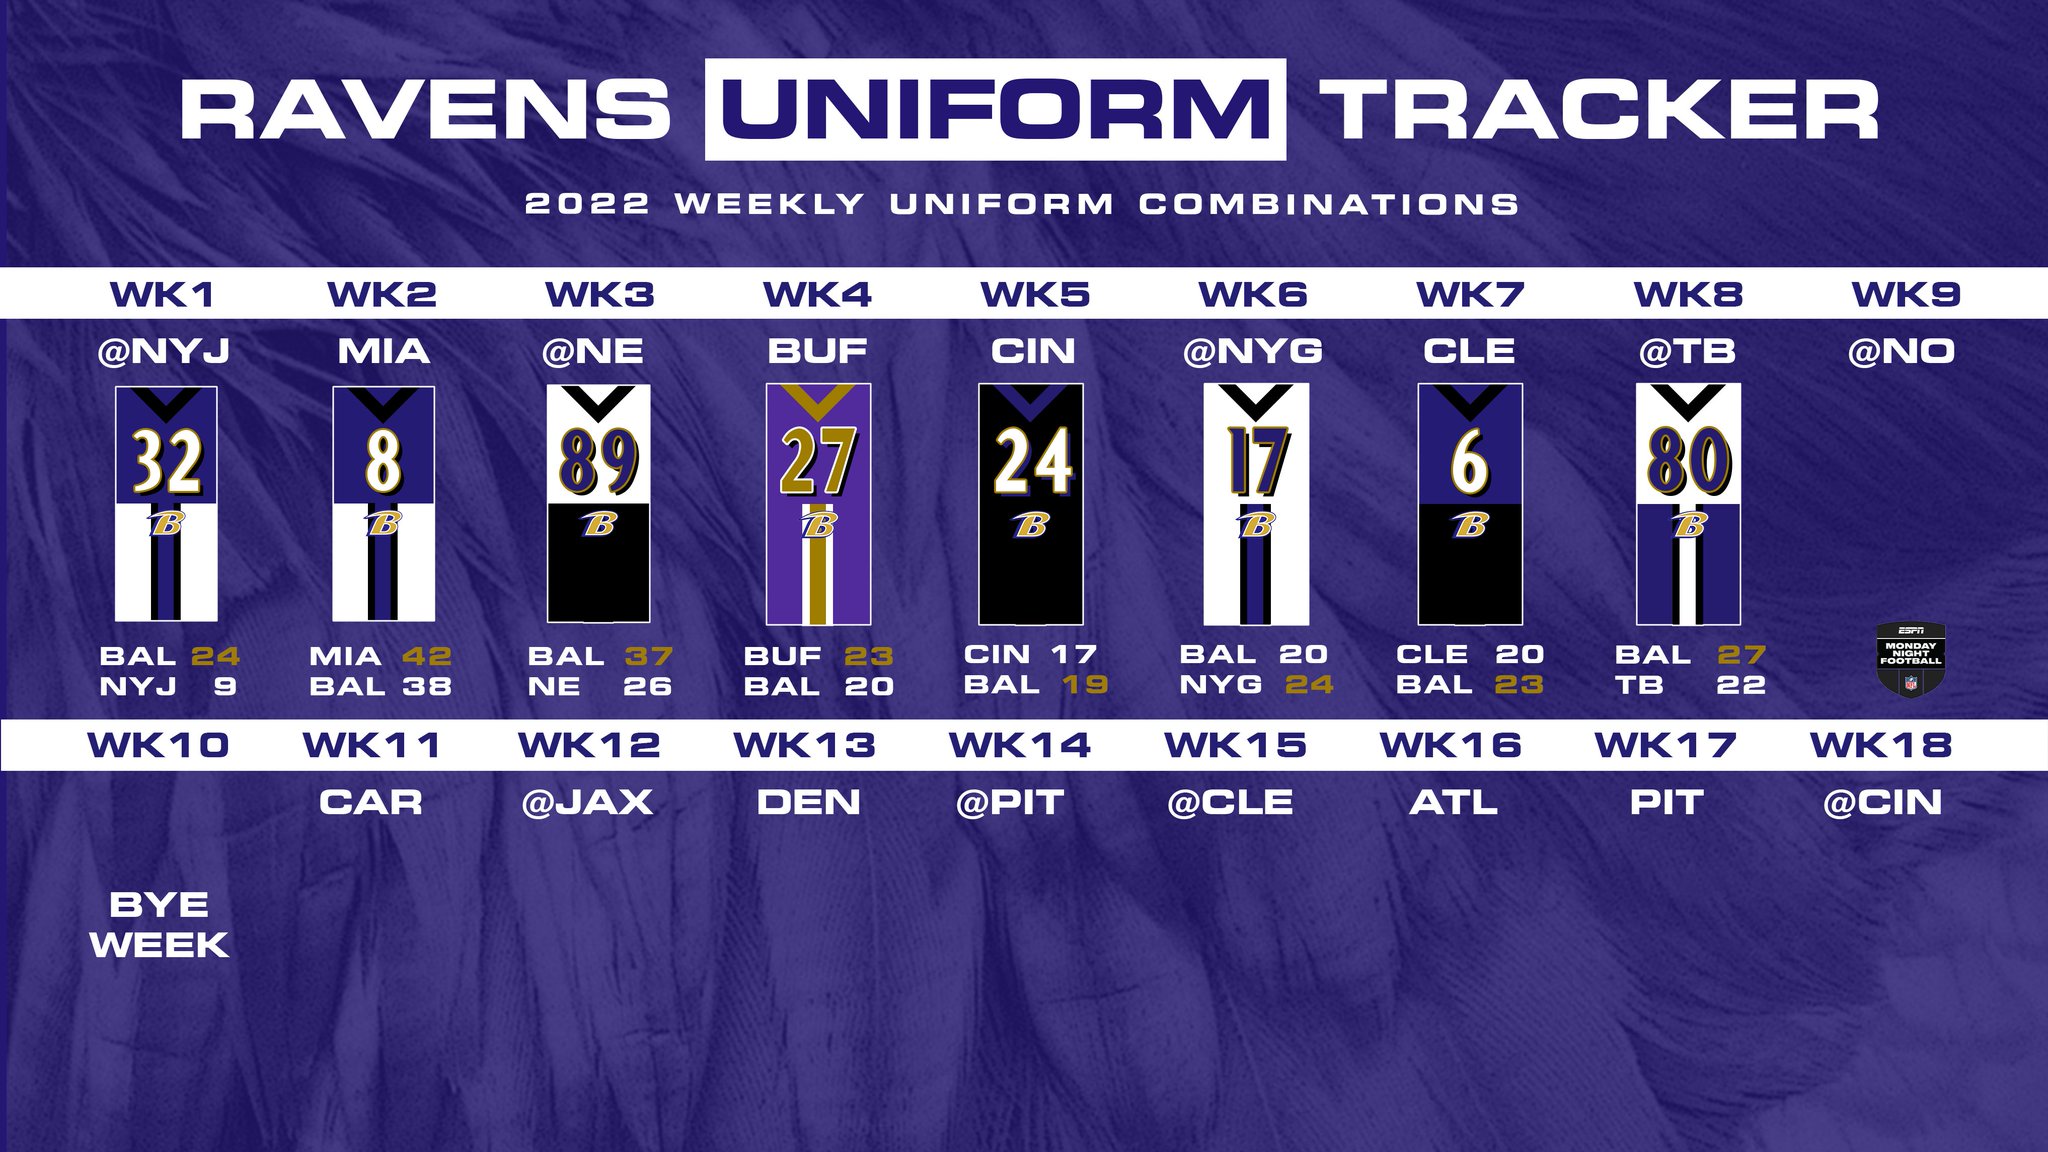 Ravens Uniform Tracker on Twitter "🚨UPDATED 2022 UNIFORM TRACKER🚨